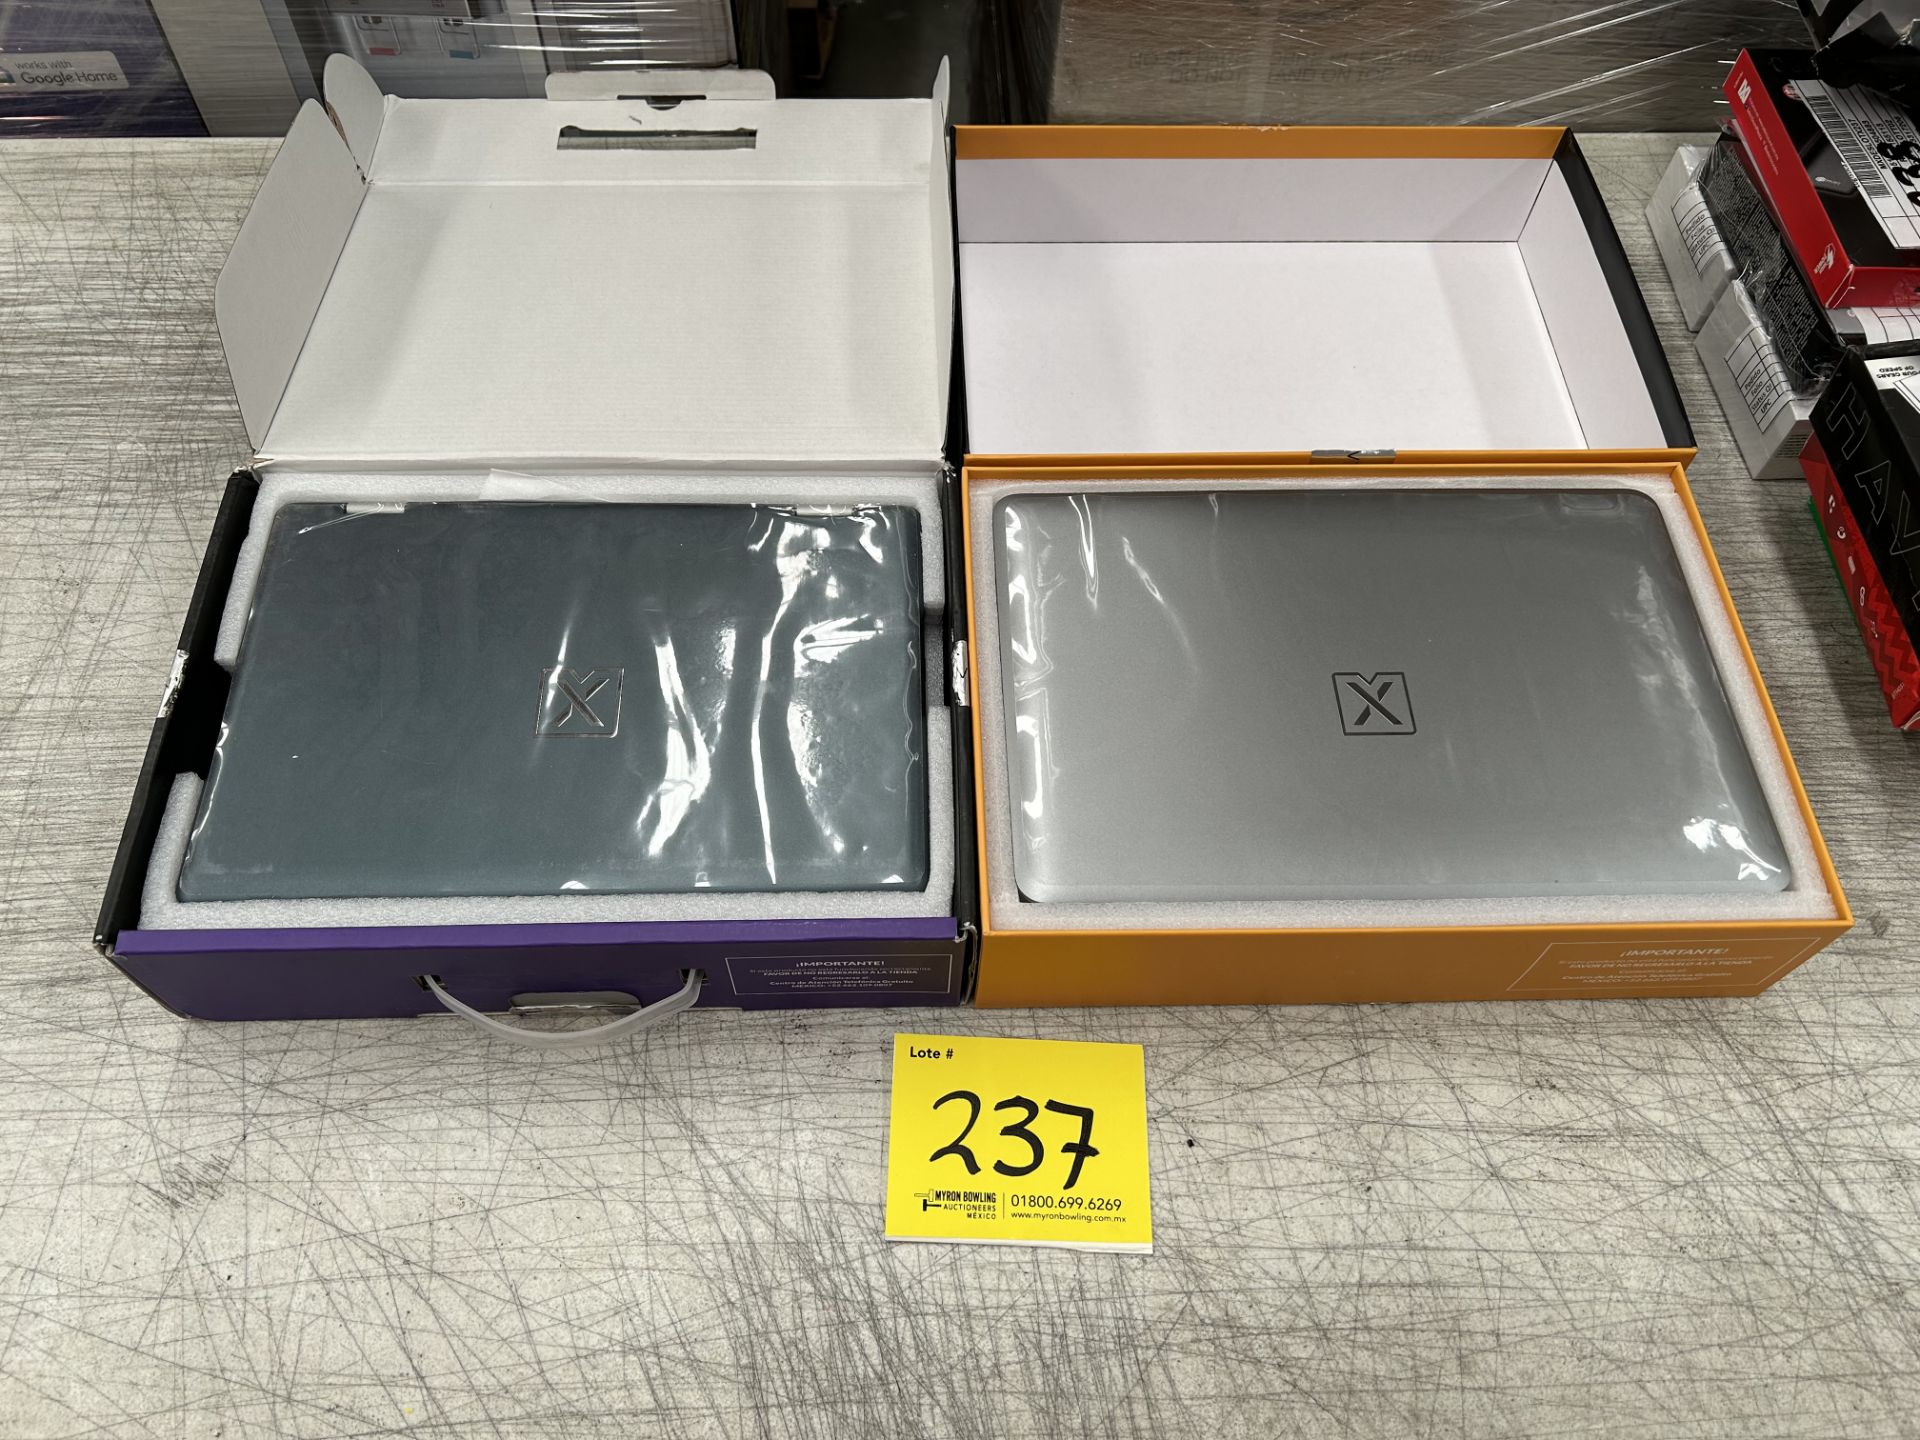 Lote de 2 laptops contiene: 1 laptop Marca LANIX, Modelo NEURON FLEX, 128 GB de almacenamiento, RAM - Image 2 of 8